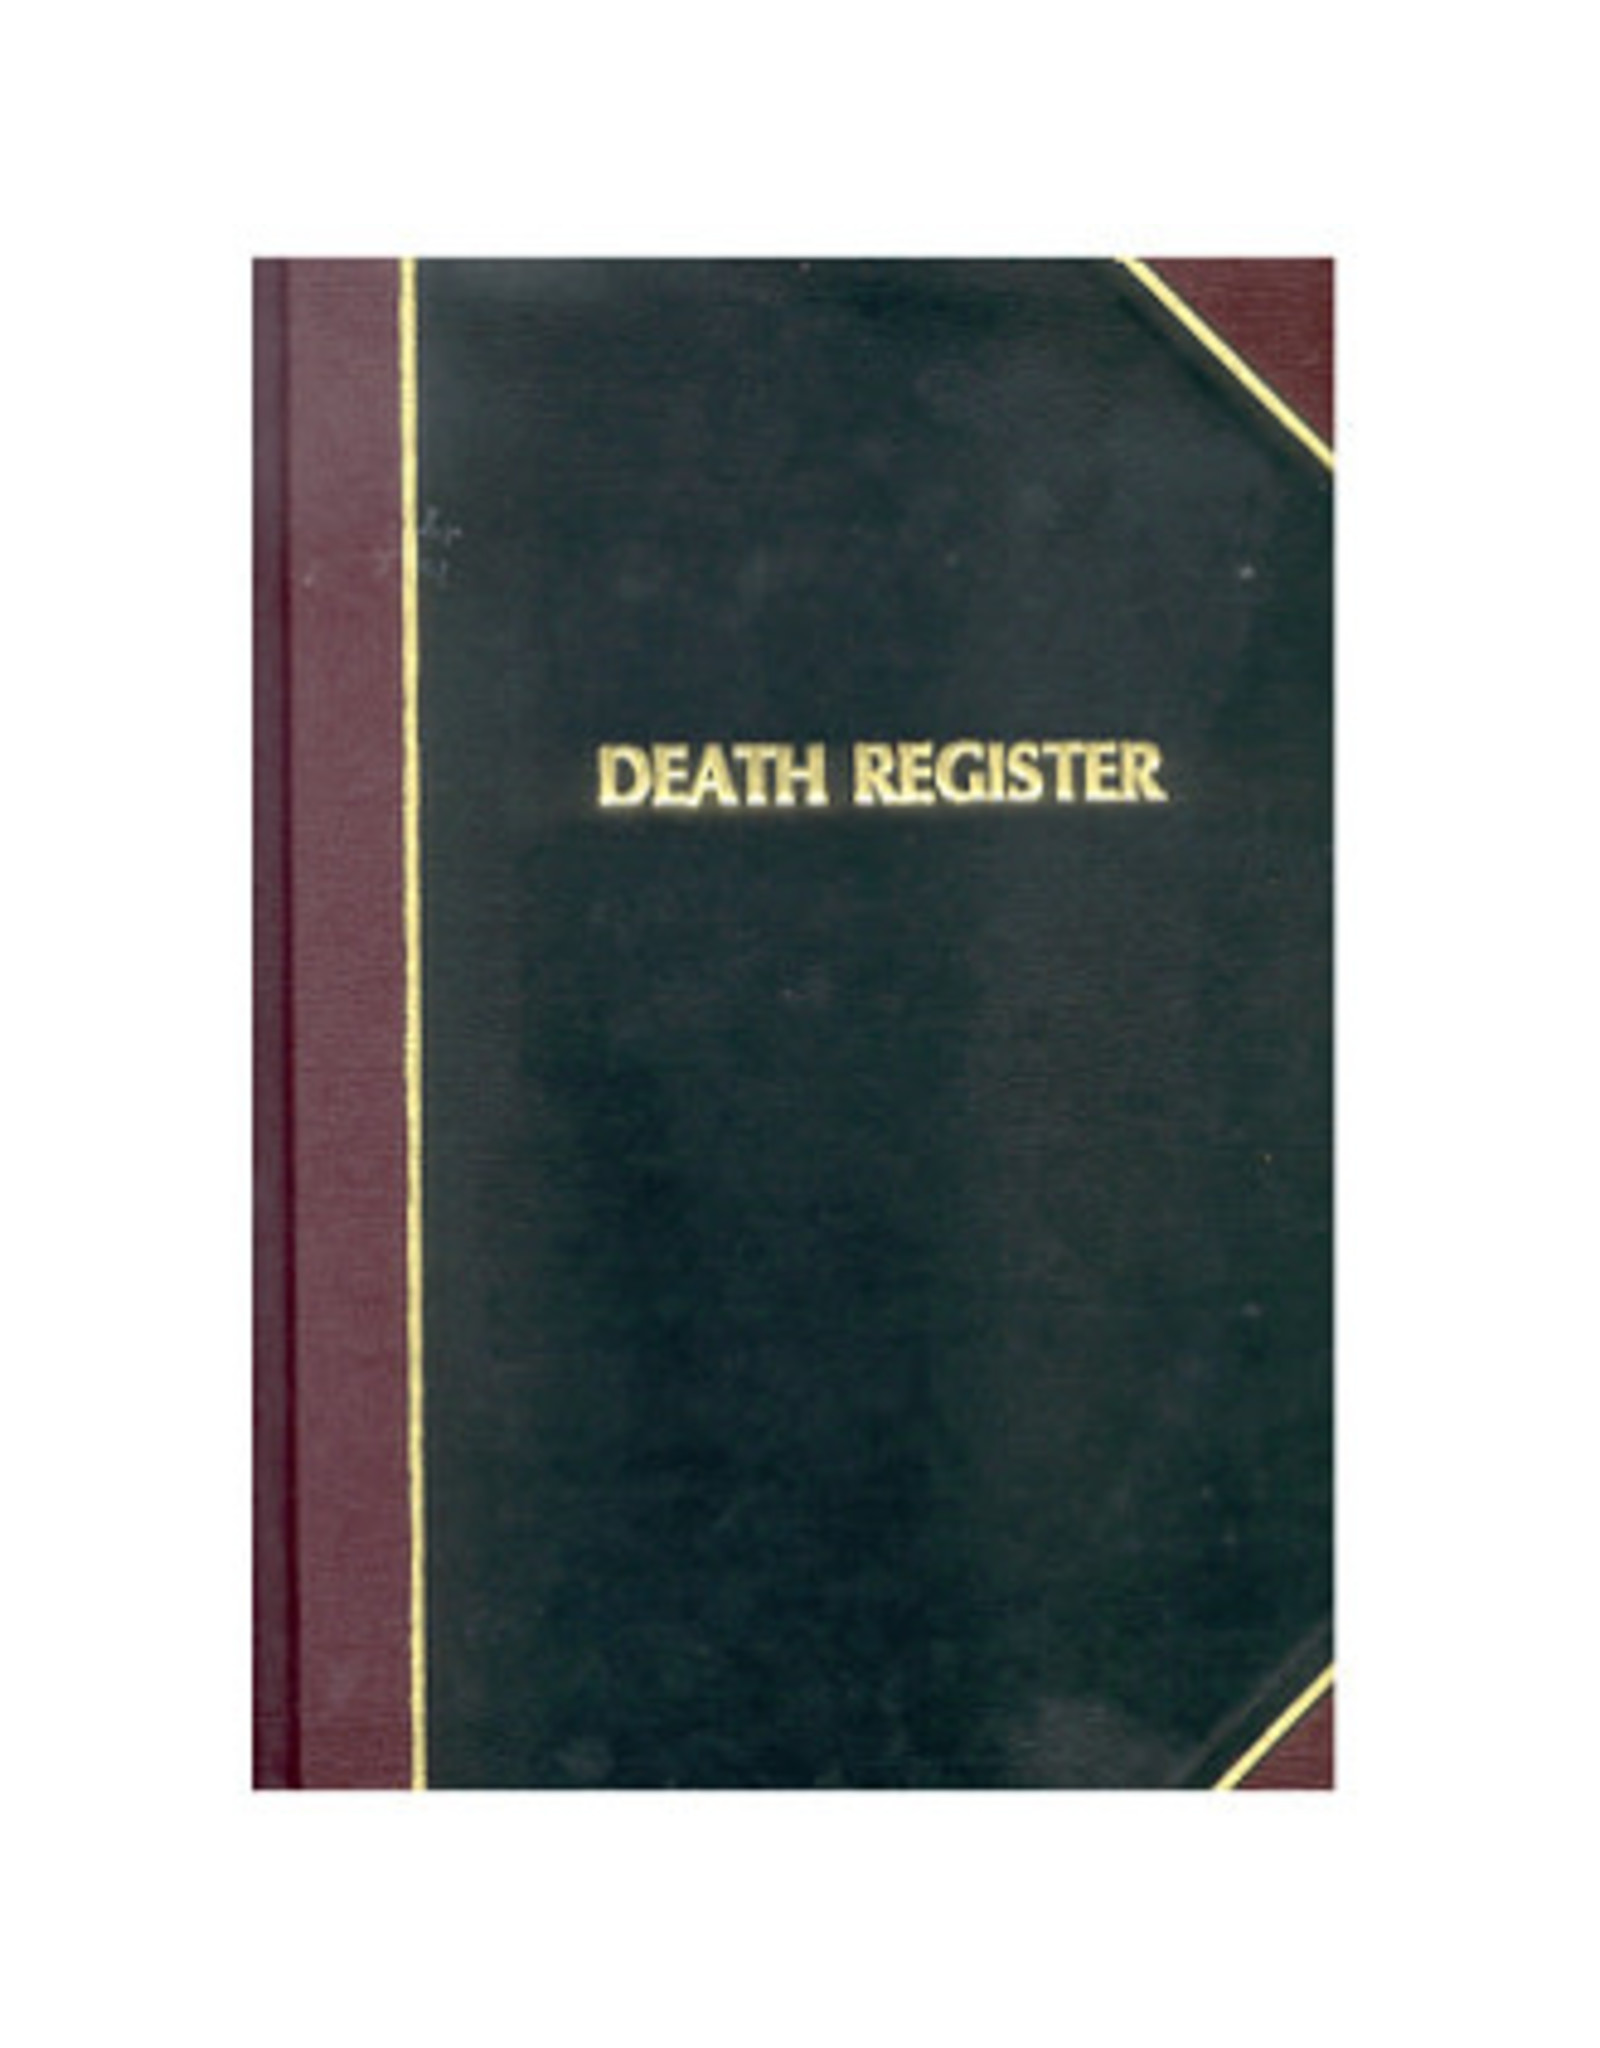 Remey, F.J. Register - Death - 1400 Entries